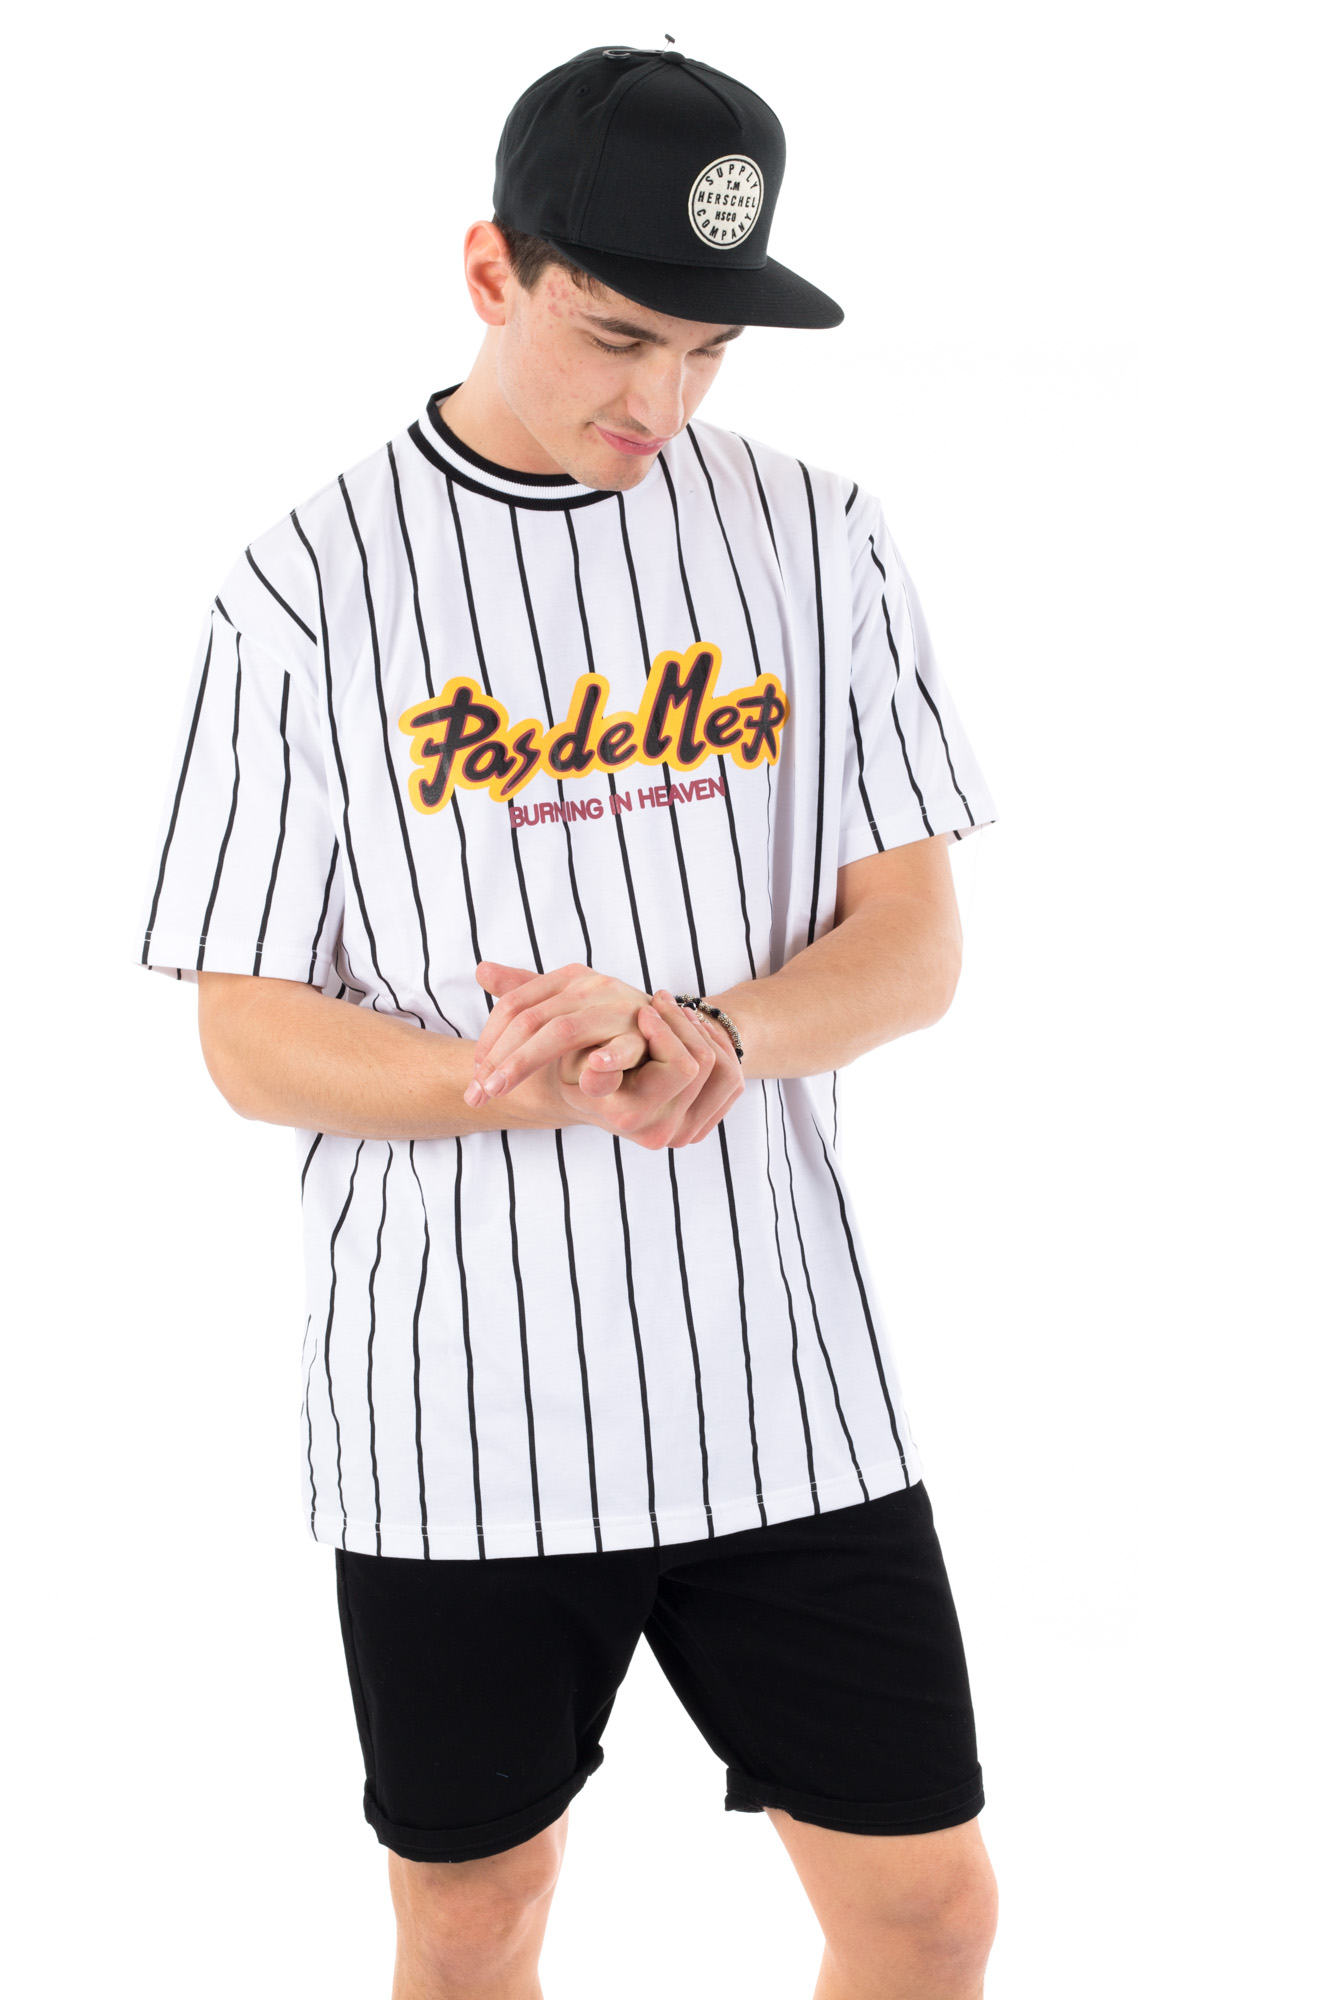 Pas De Mer - Baseball-style striped t-shirt